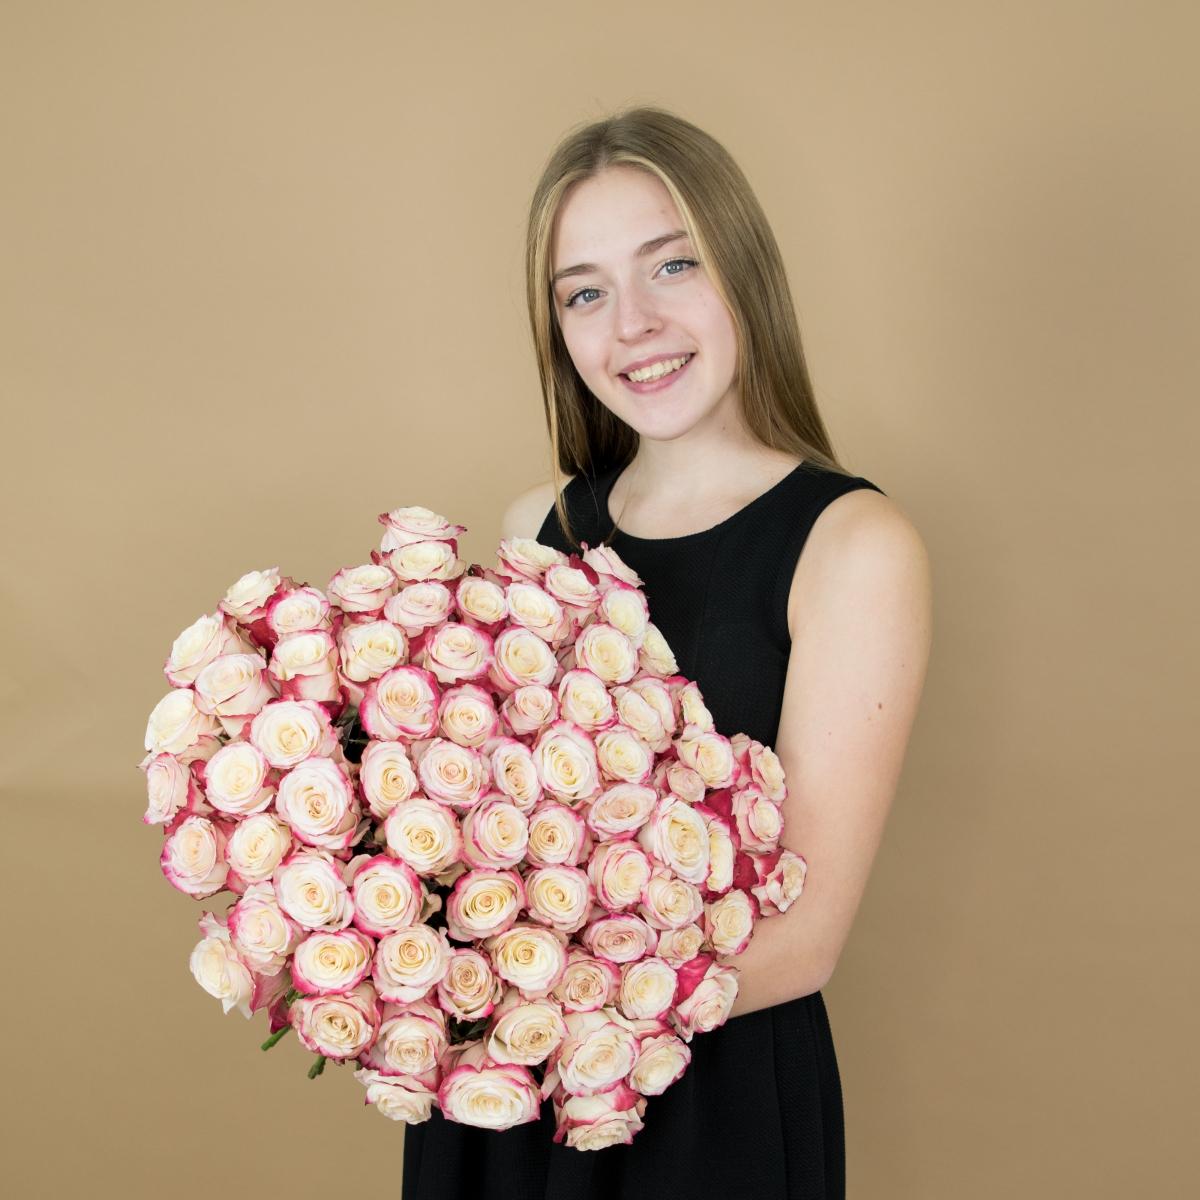 Розы красно-белые (40 см) Эквадор артикул букета  519